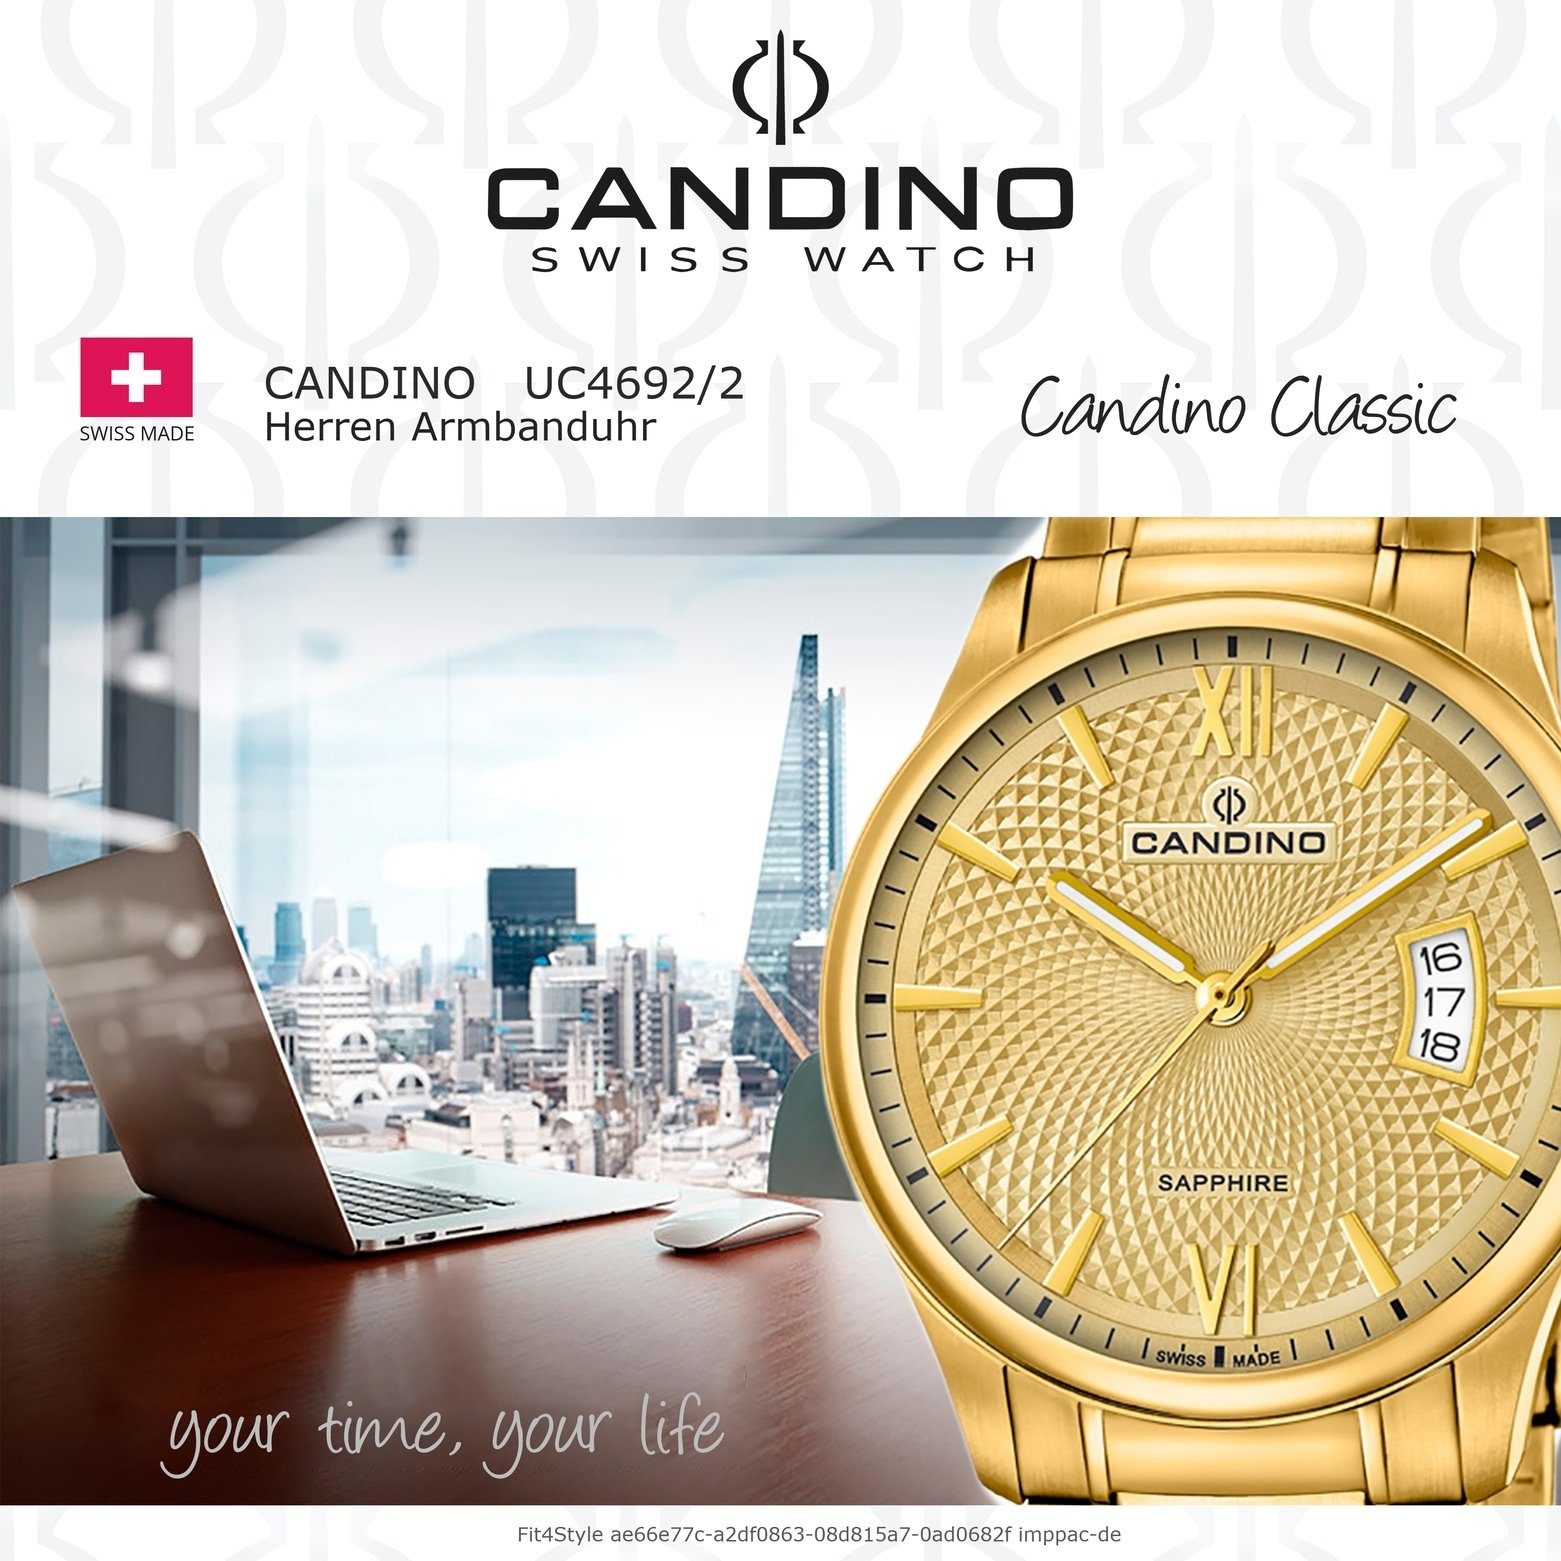 Quarzuhr Uhr Edelstahlarmband Candino Analog Herren rund, Armbanduhr gold, Herren C4692/2, Candino Elegant